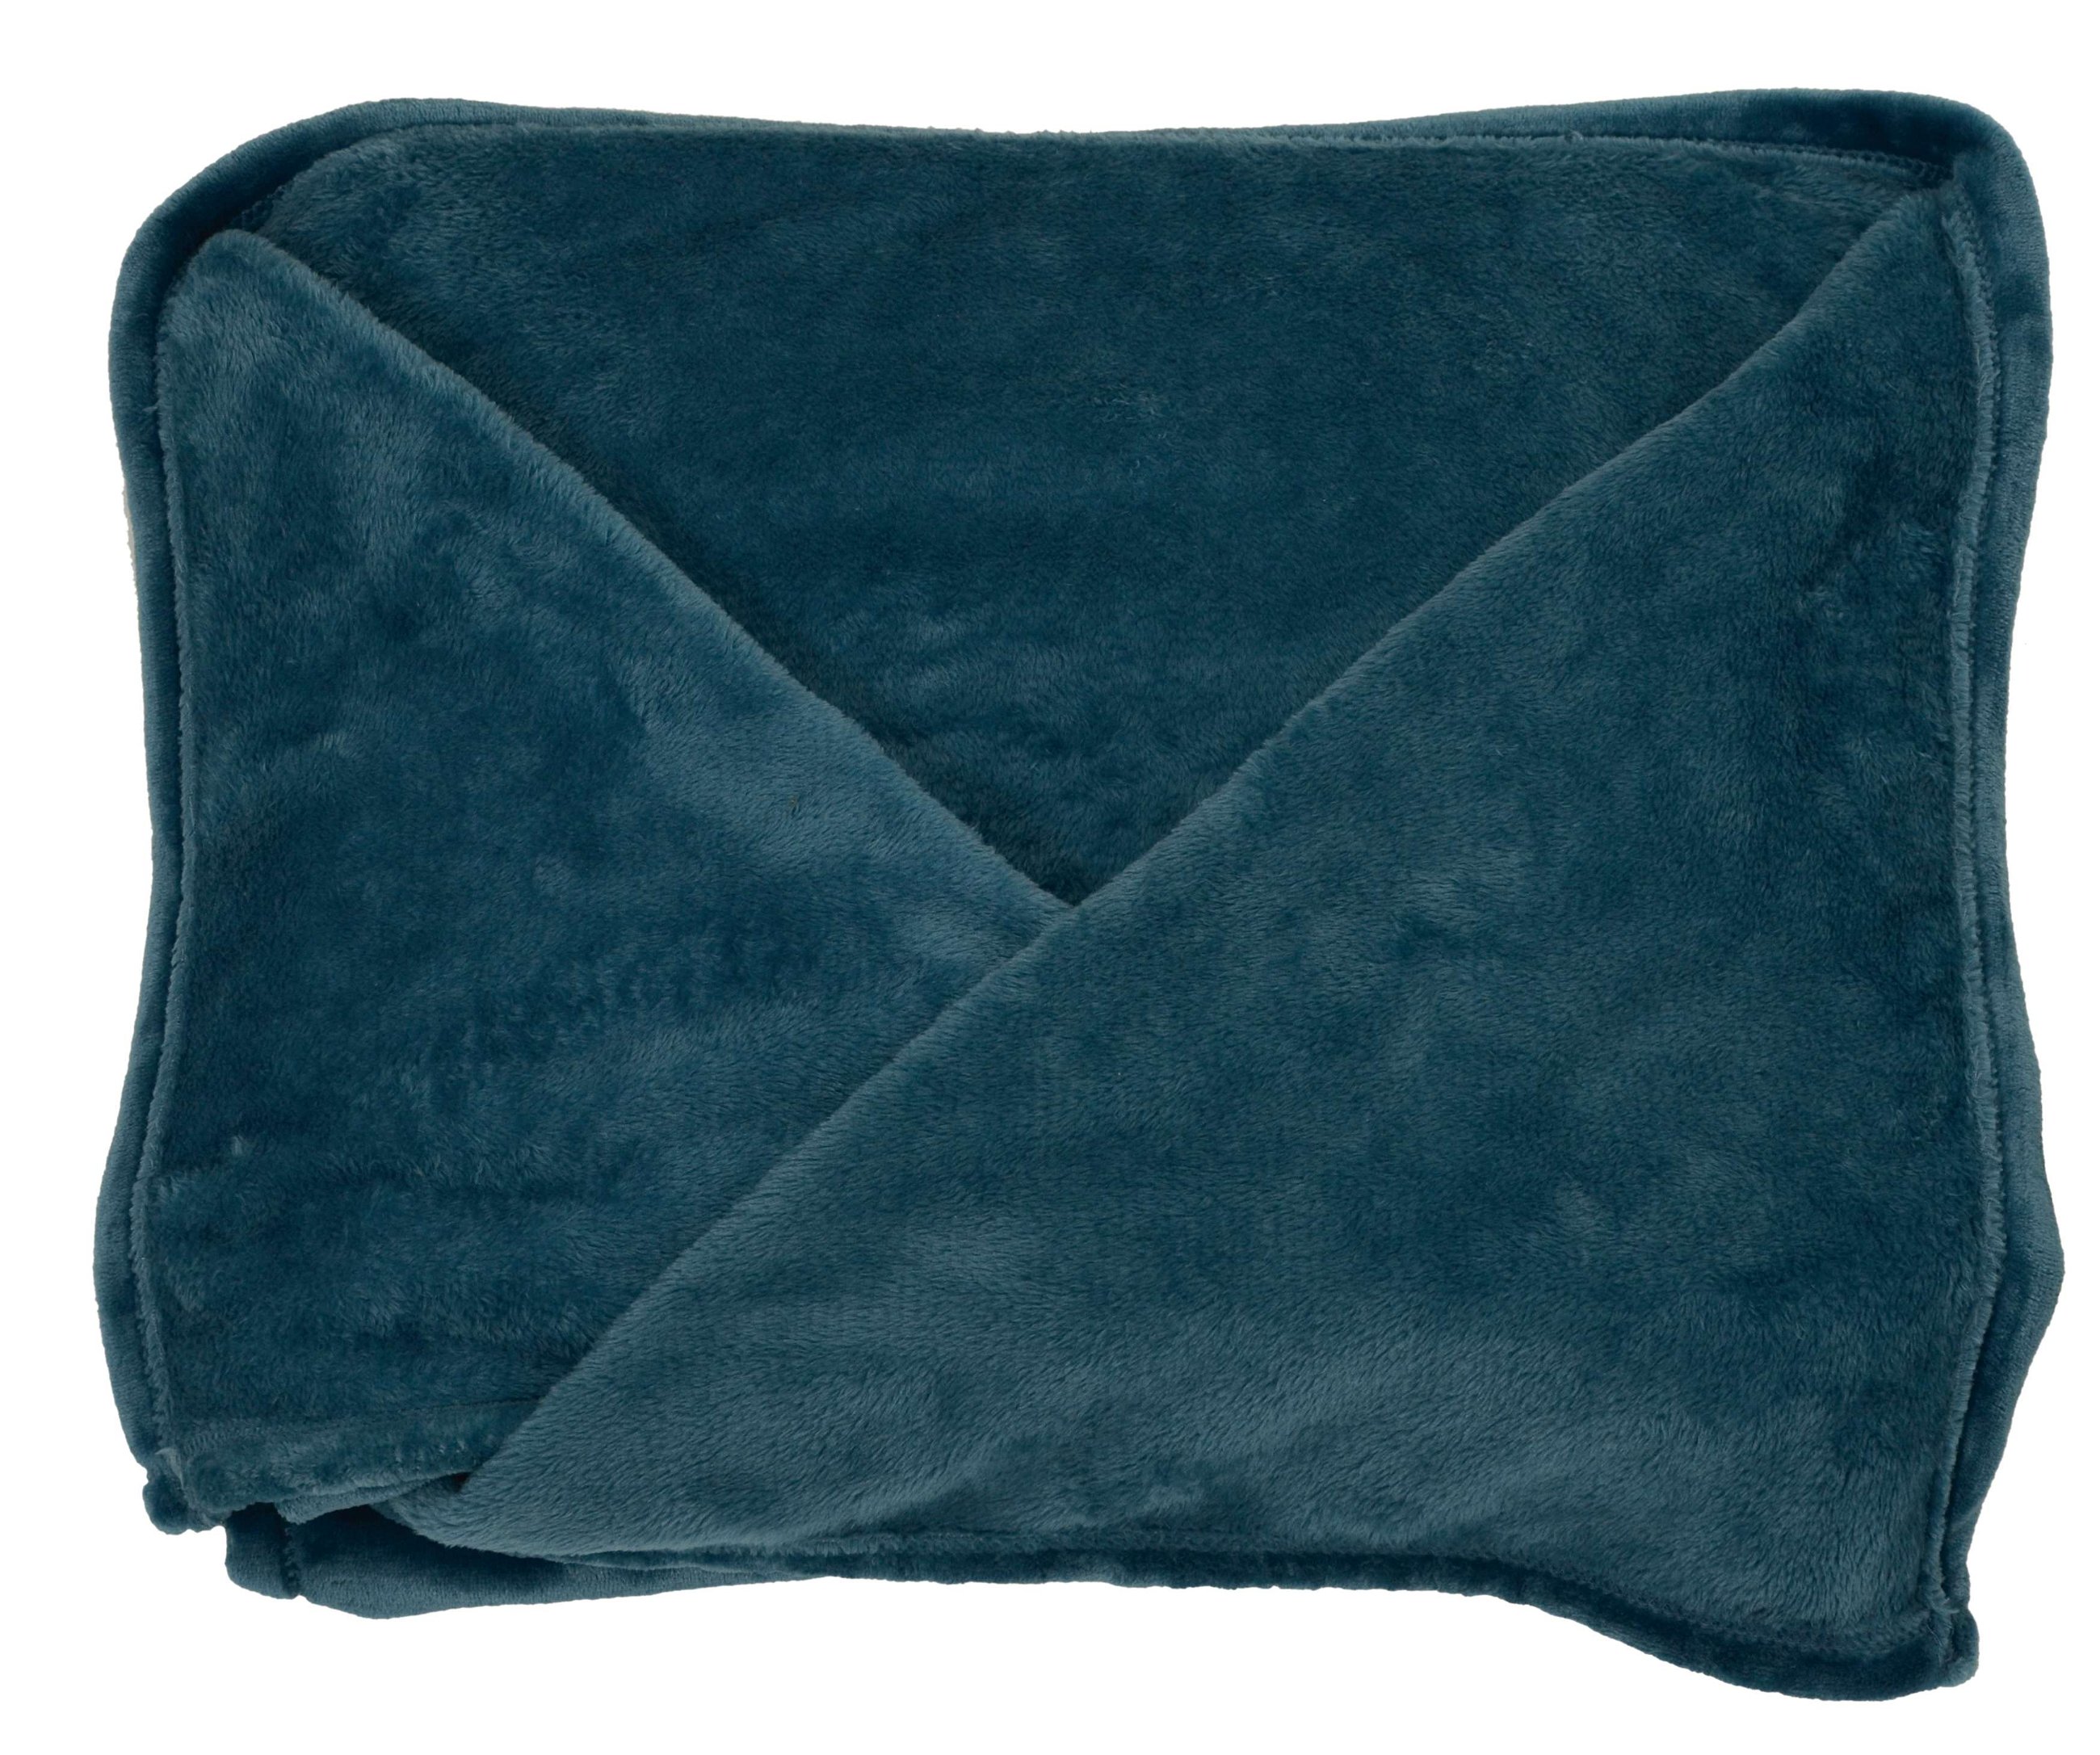 Snuggle blanket Snuggle fleece blanket XL with sleeves blue 170x200cm